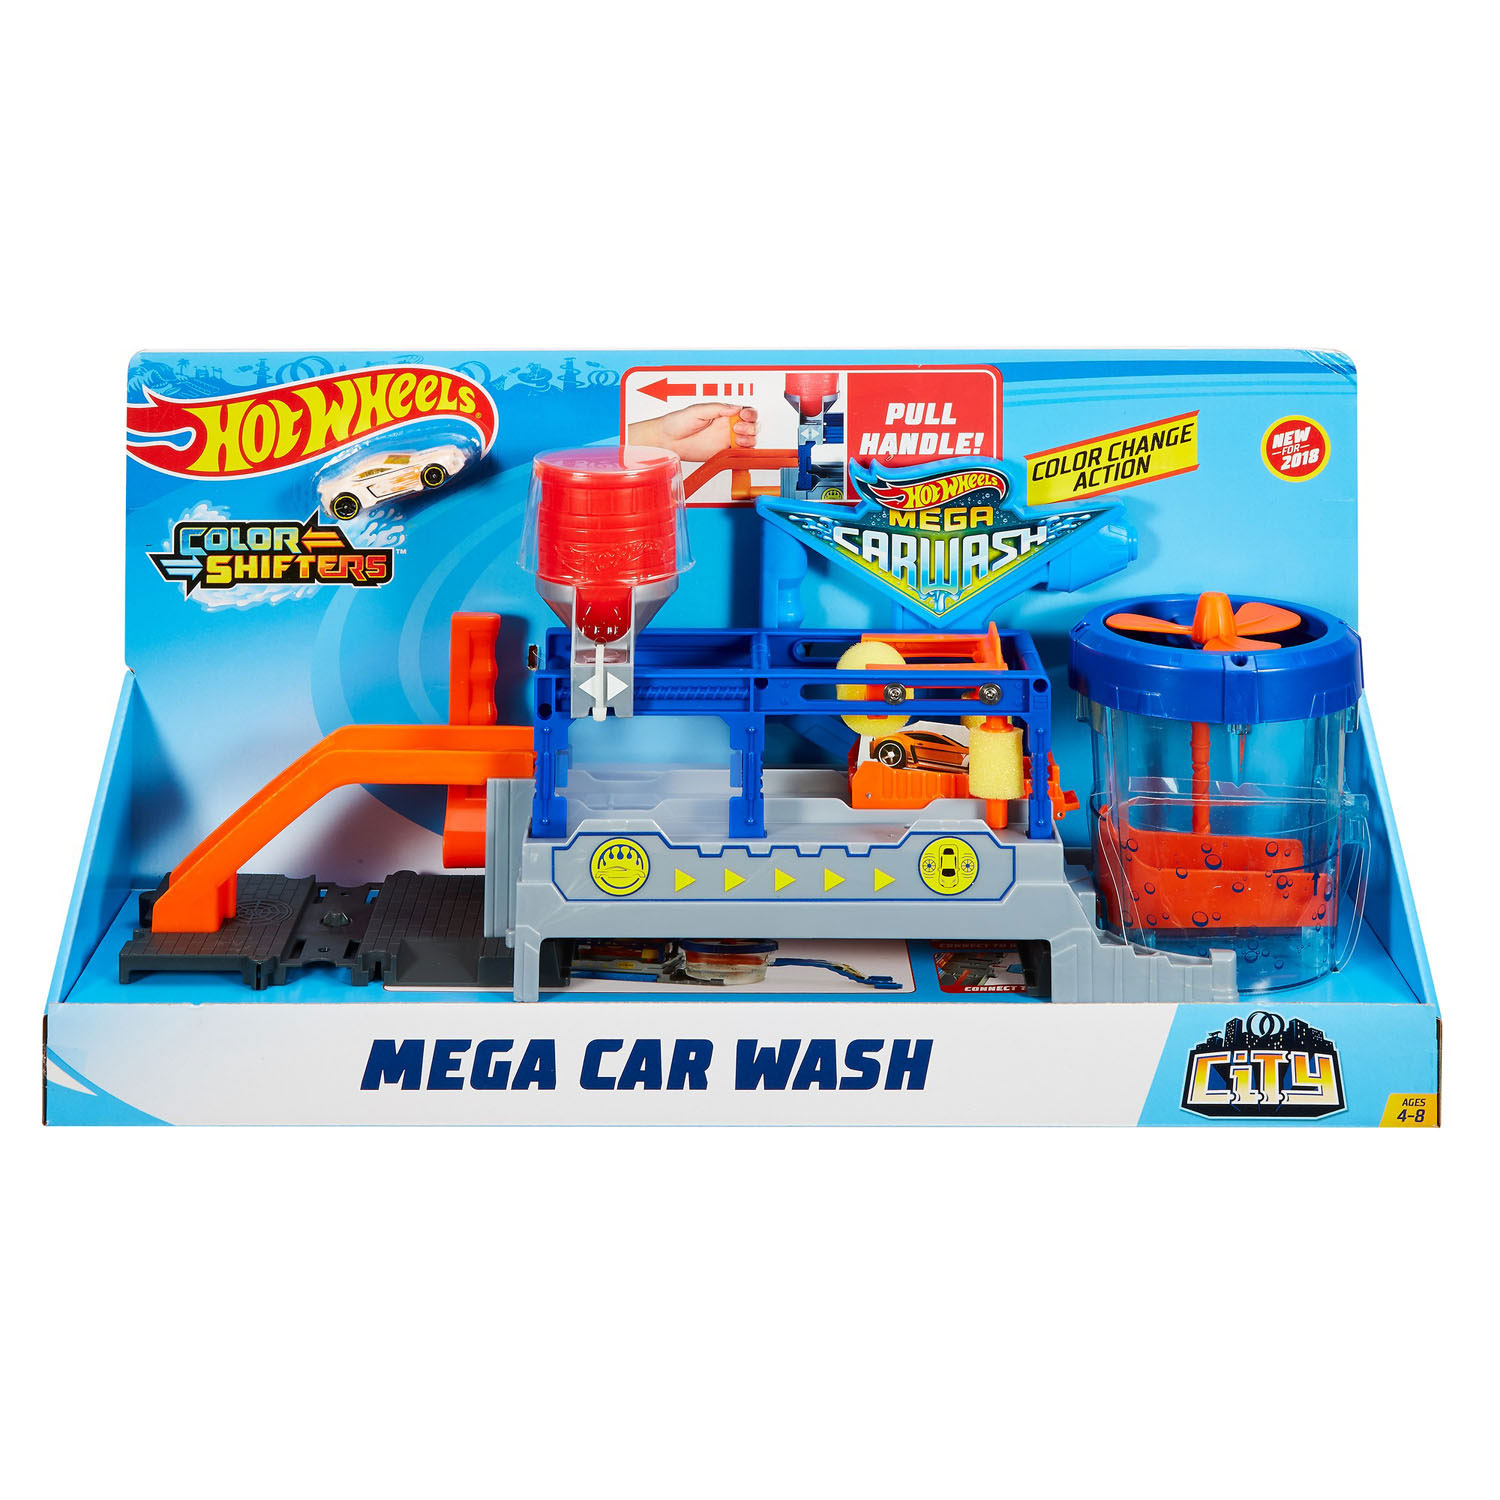 Regulatie Achterhouden Adviseur Hot Wheels Ultimate Series - Mega Car Wash | Thimble Toys